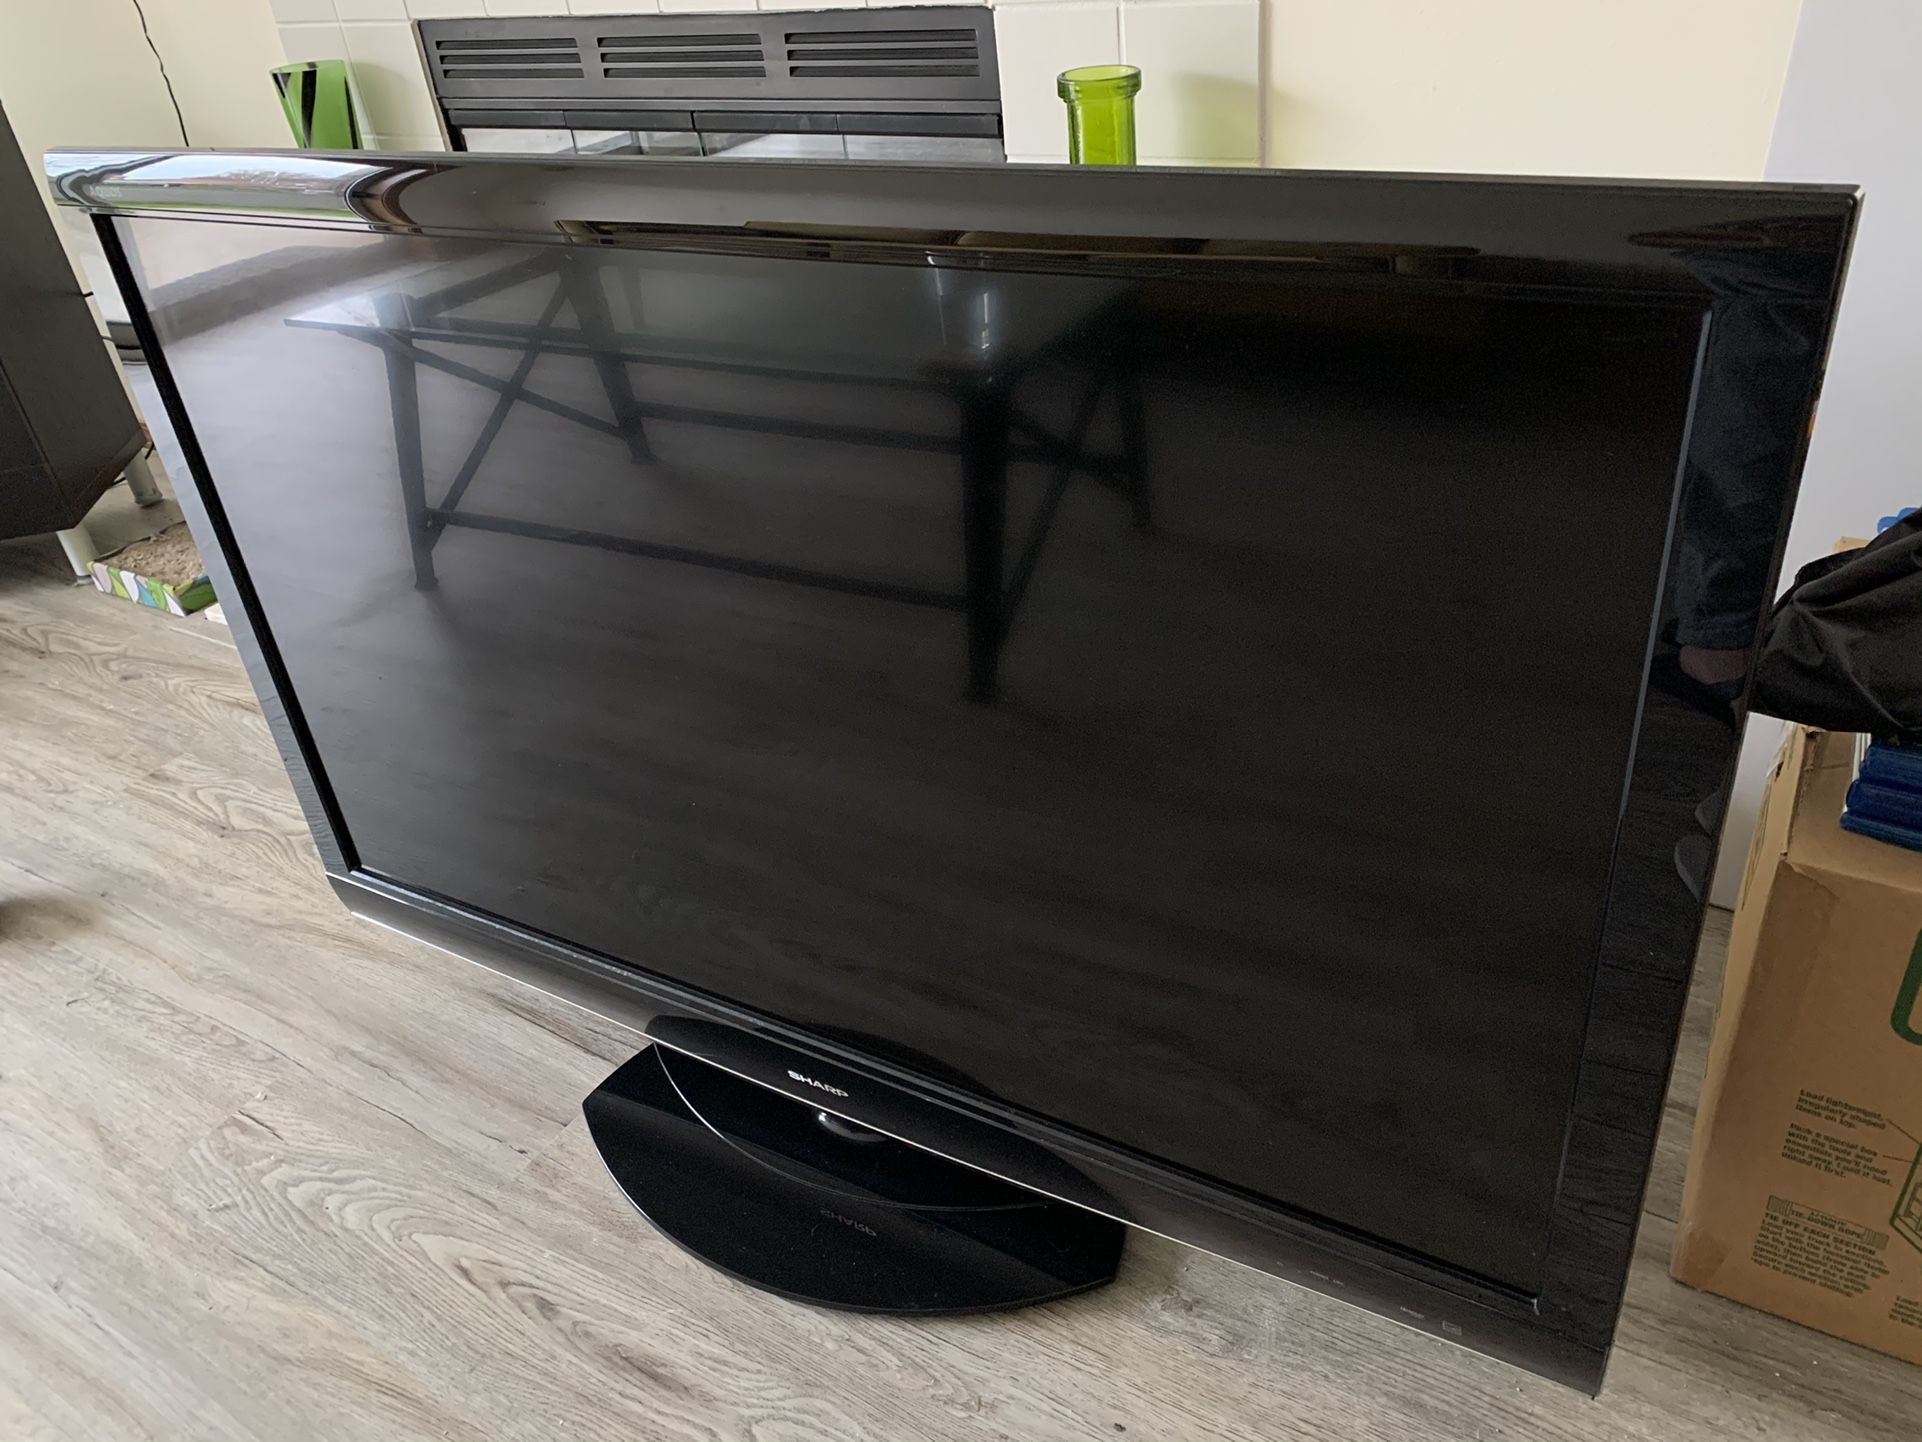 Sharp AQUOS 52” LCD TV - Perfect Condition